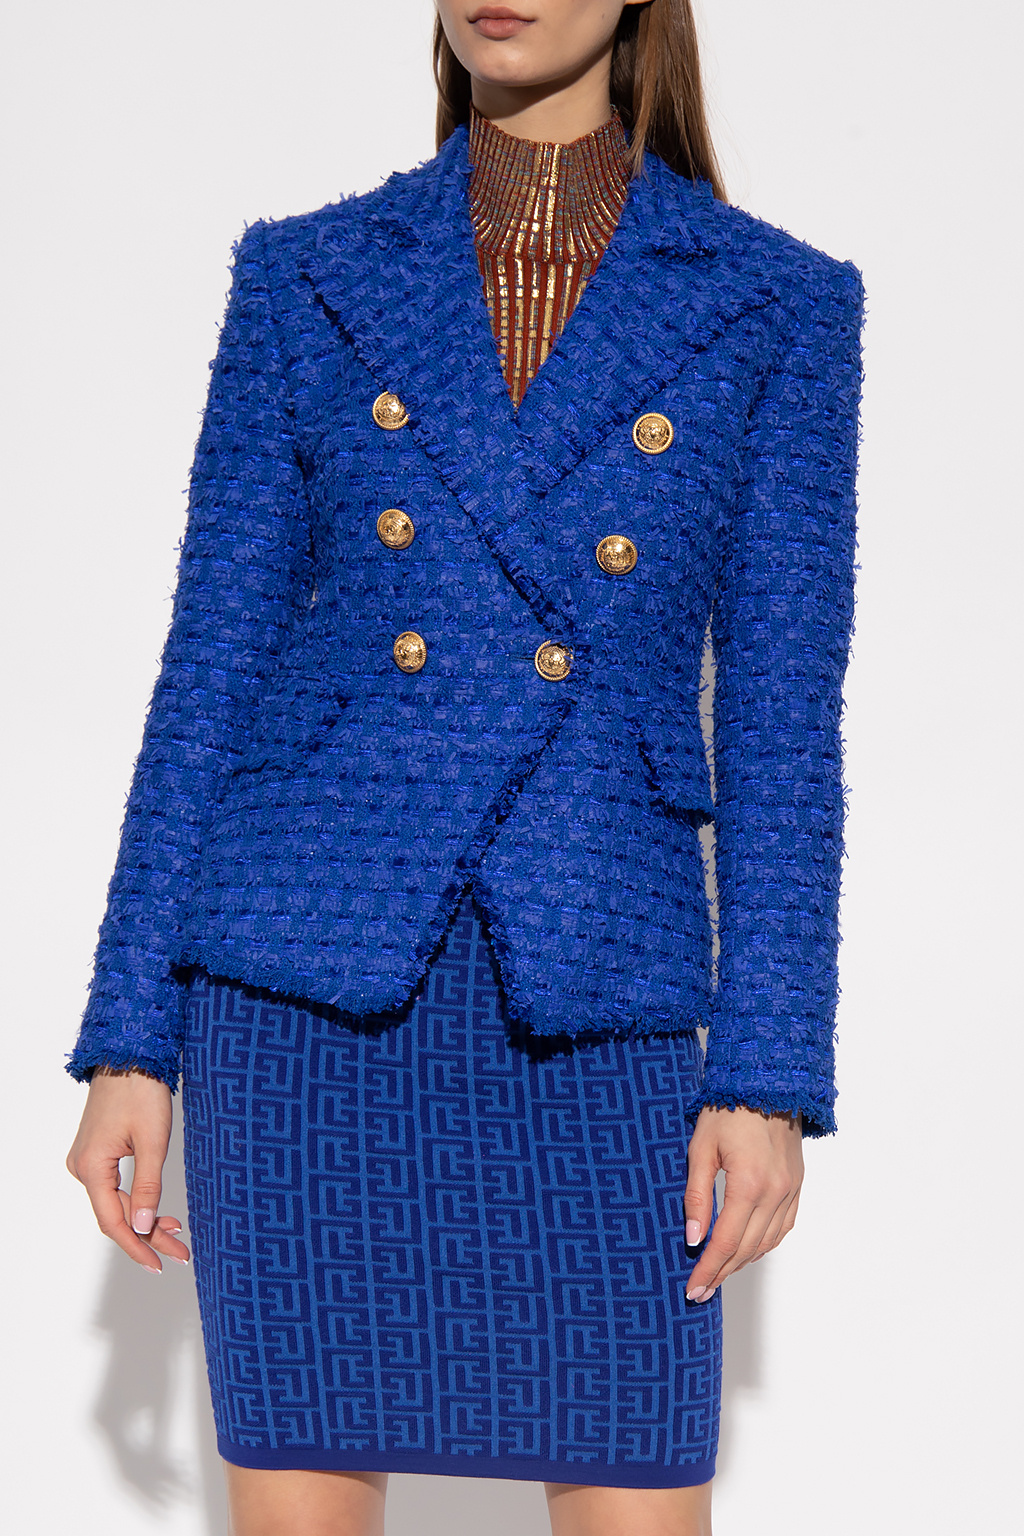 Red, White, and Blue Tweed Blazer — Enchanting Elegance